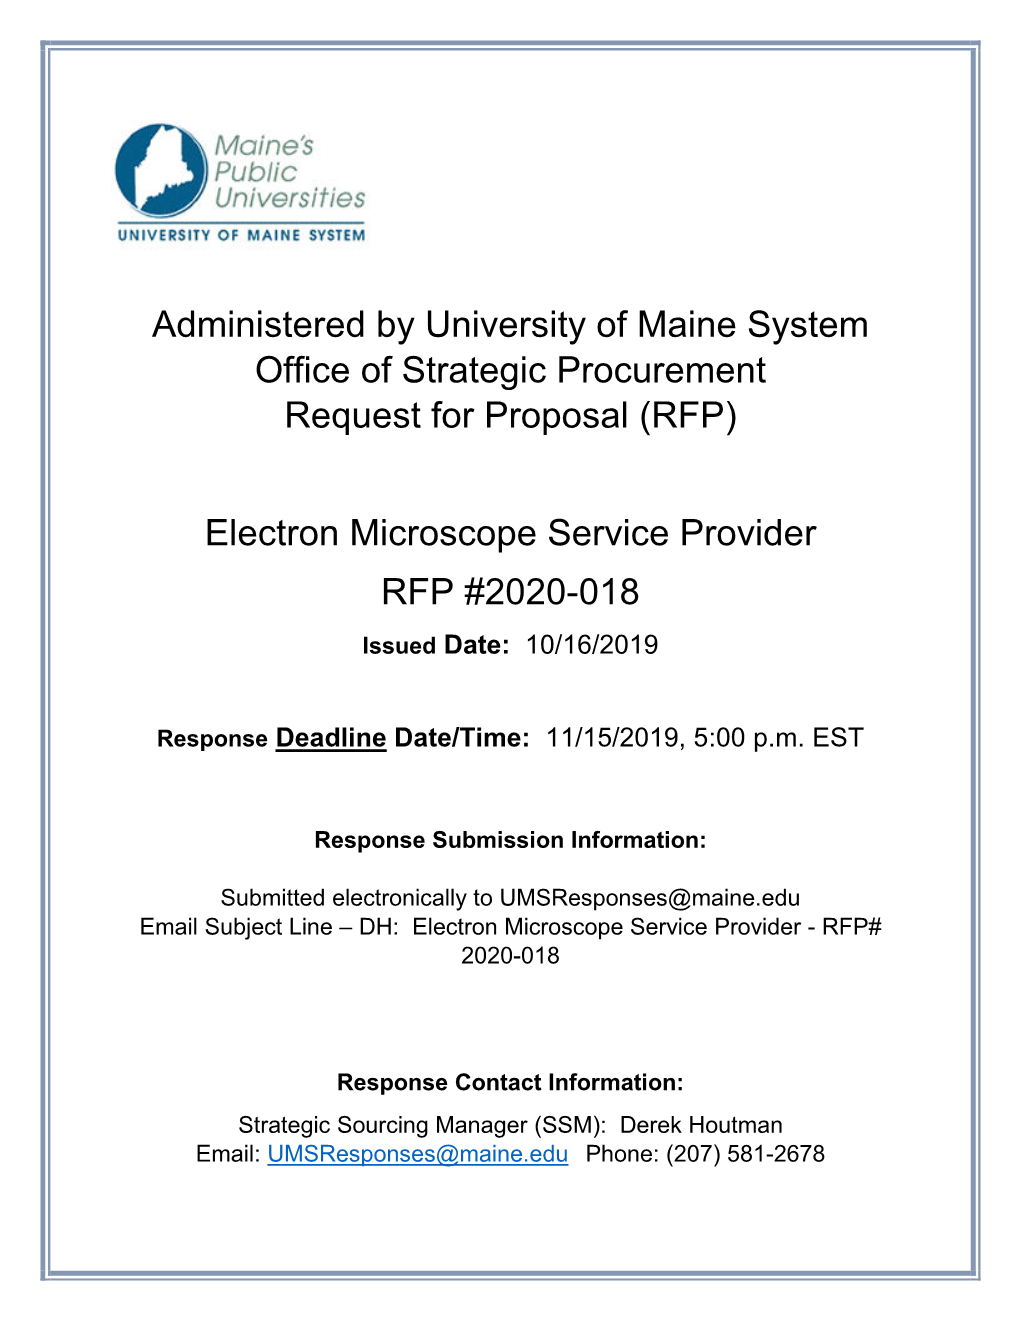 RFP 2020-018 Electron Microscope Service Provider